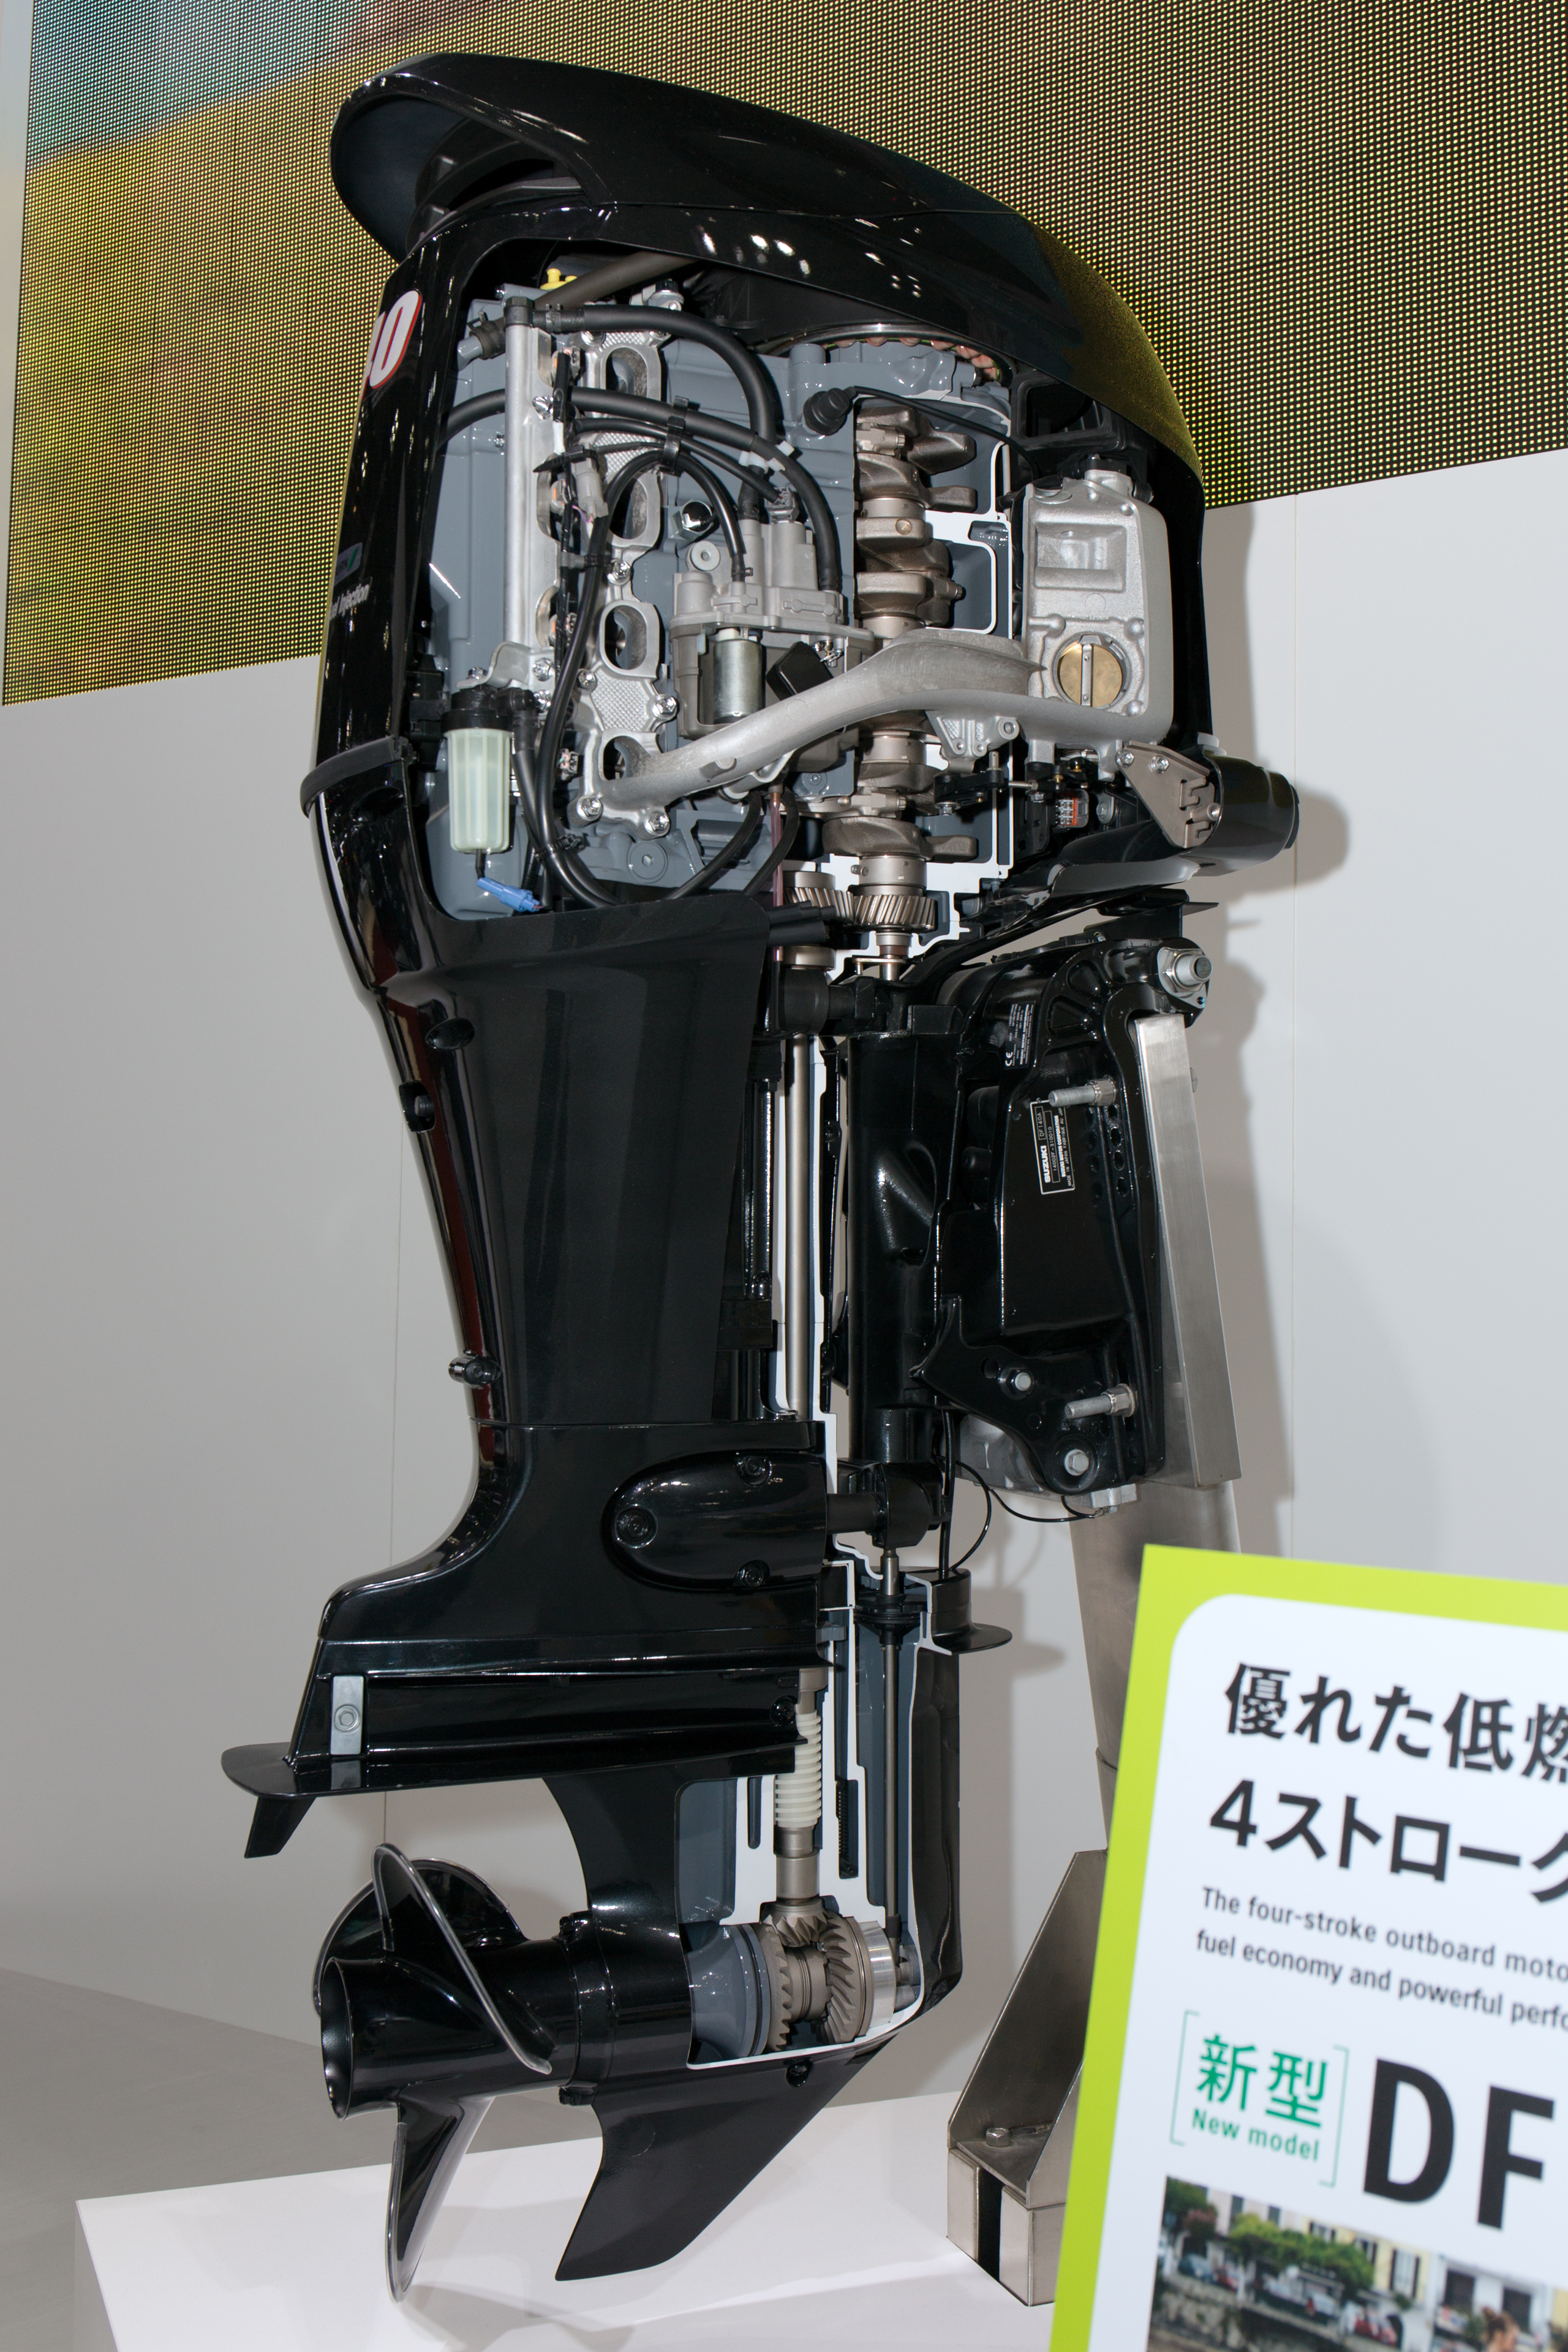 File Suzuki Df140a Outboard Motor Rear Right 13 Tokyo Motor Show Jpg Wikimedia Commons